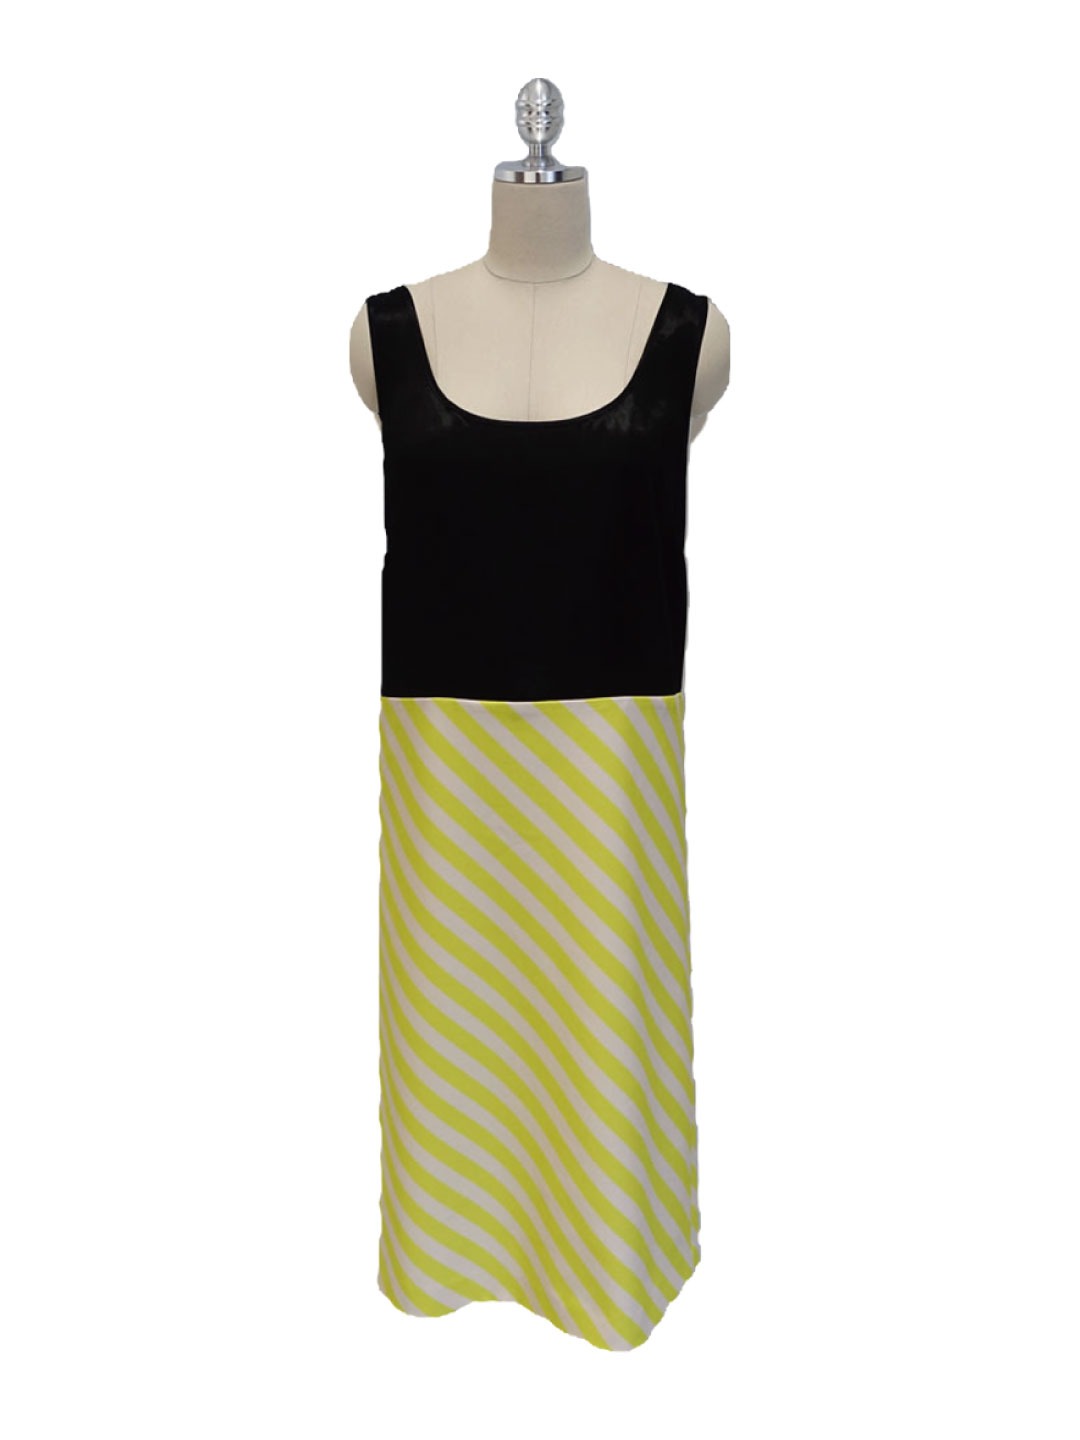 108. 2-Tone Diagonal Stripe  Sleeveless Dress / 투톤 사선 스트라이프 슬리브리스 드레스